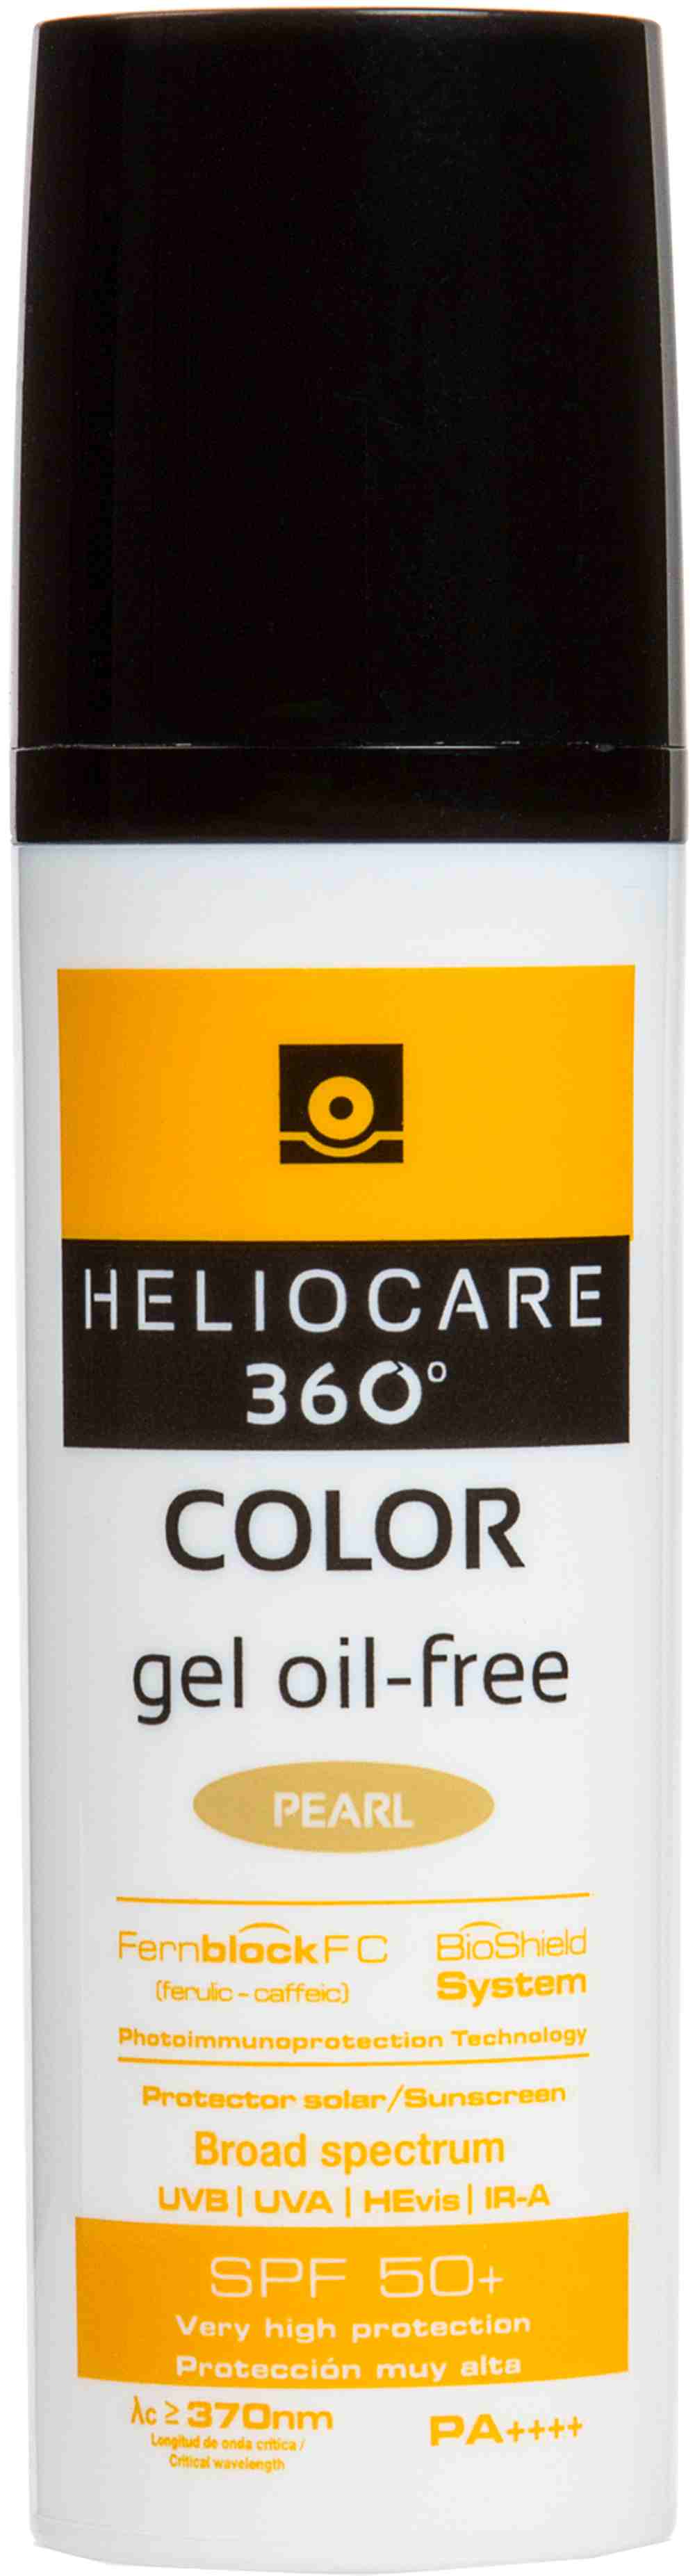 Heliocare 360° Color Gel oil-free SPF 50 Pearl 50ml